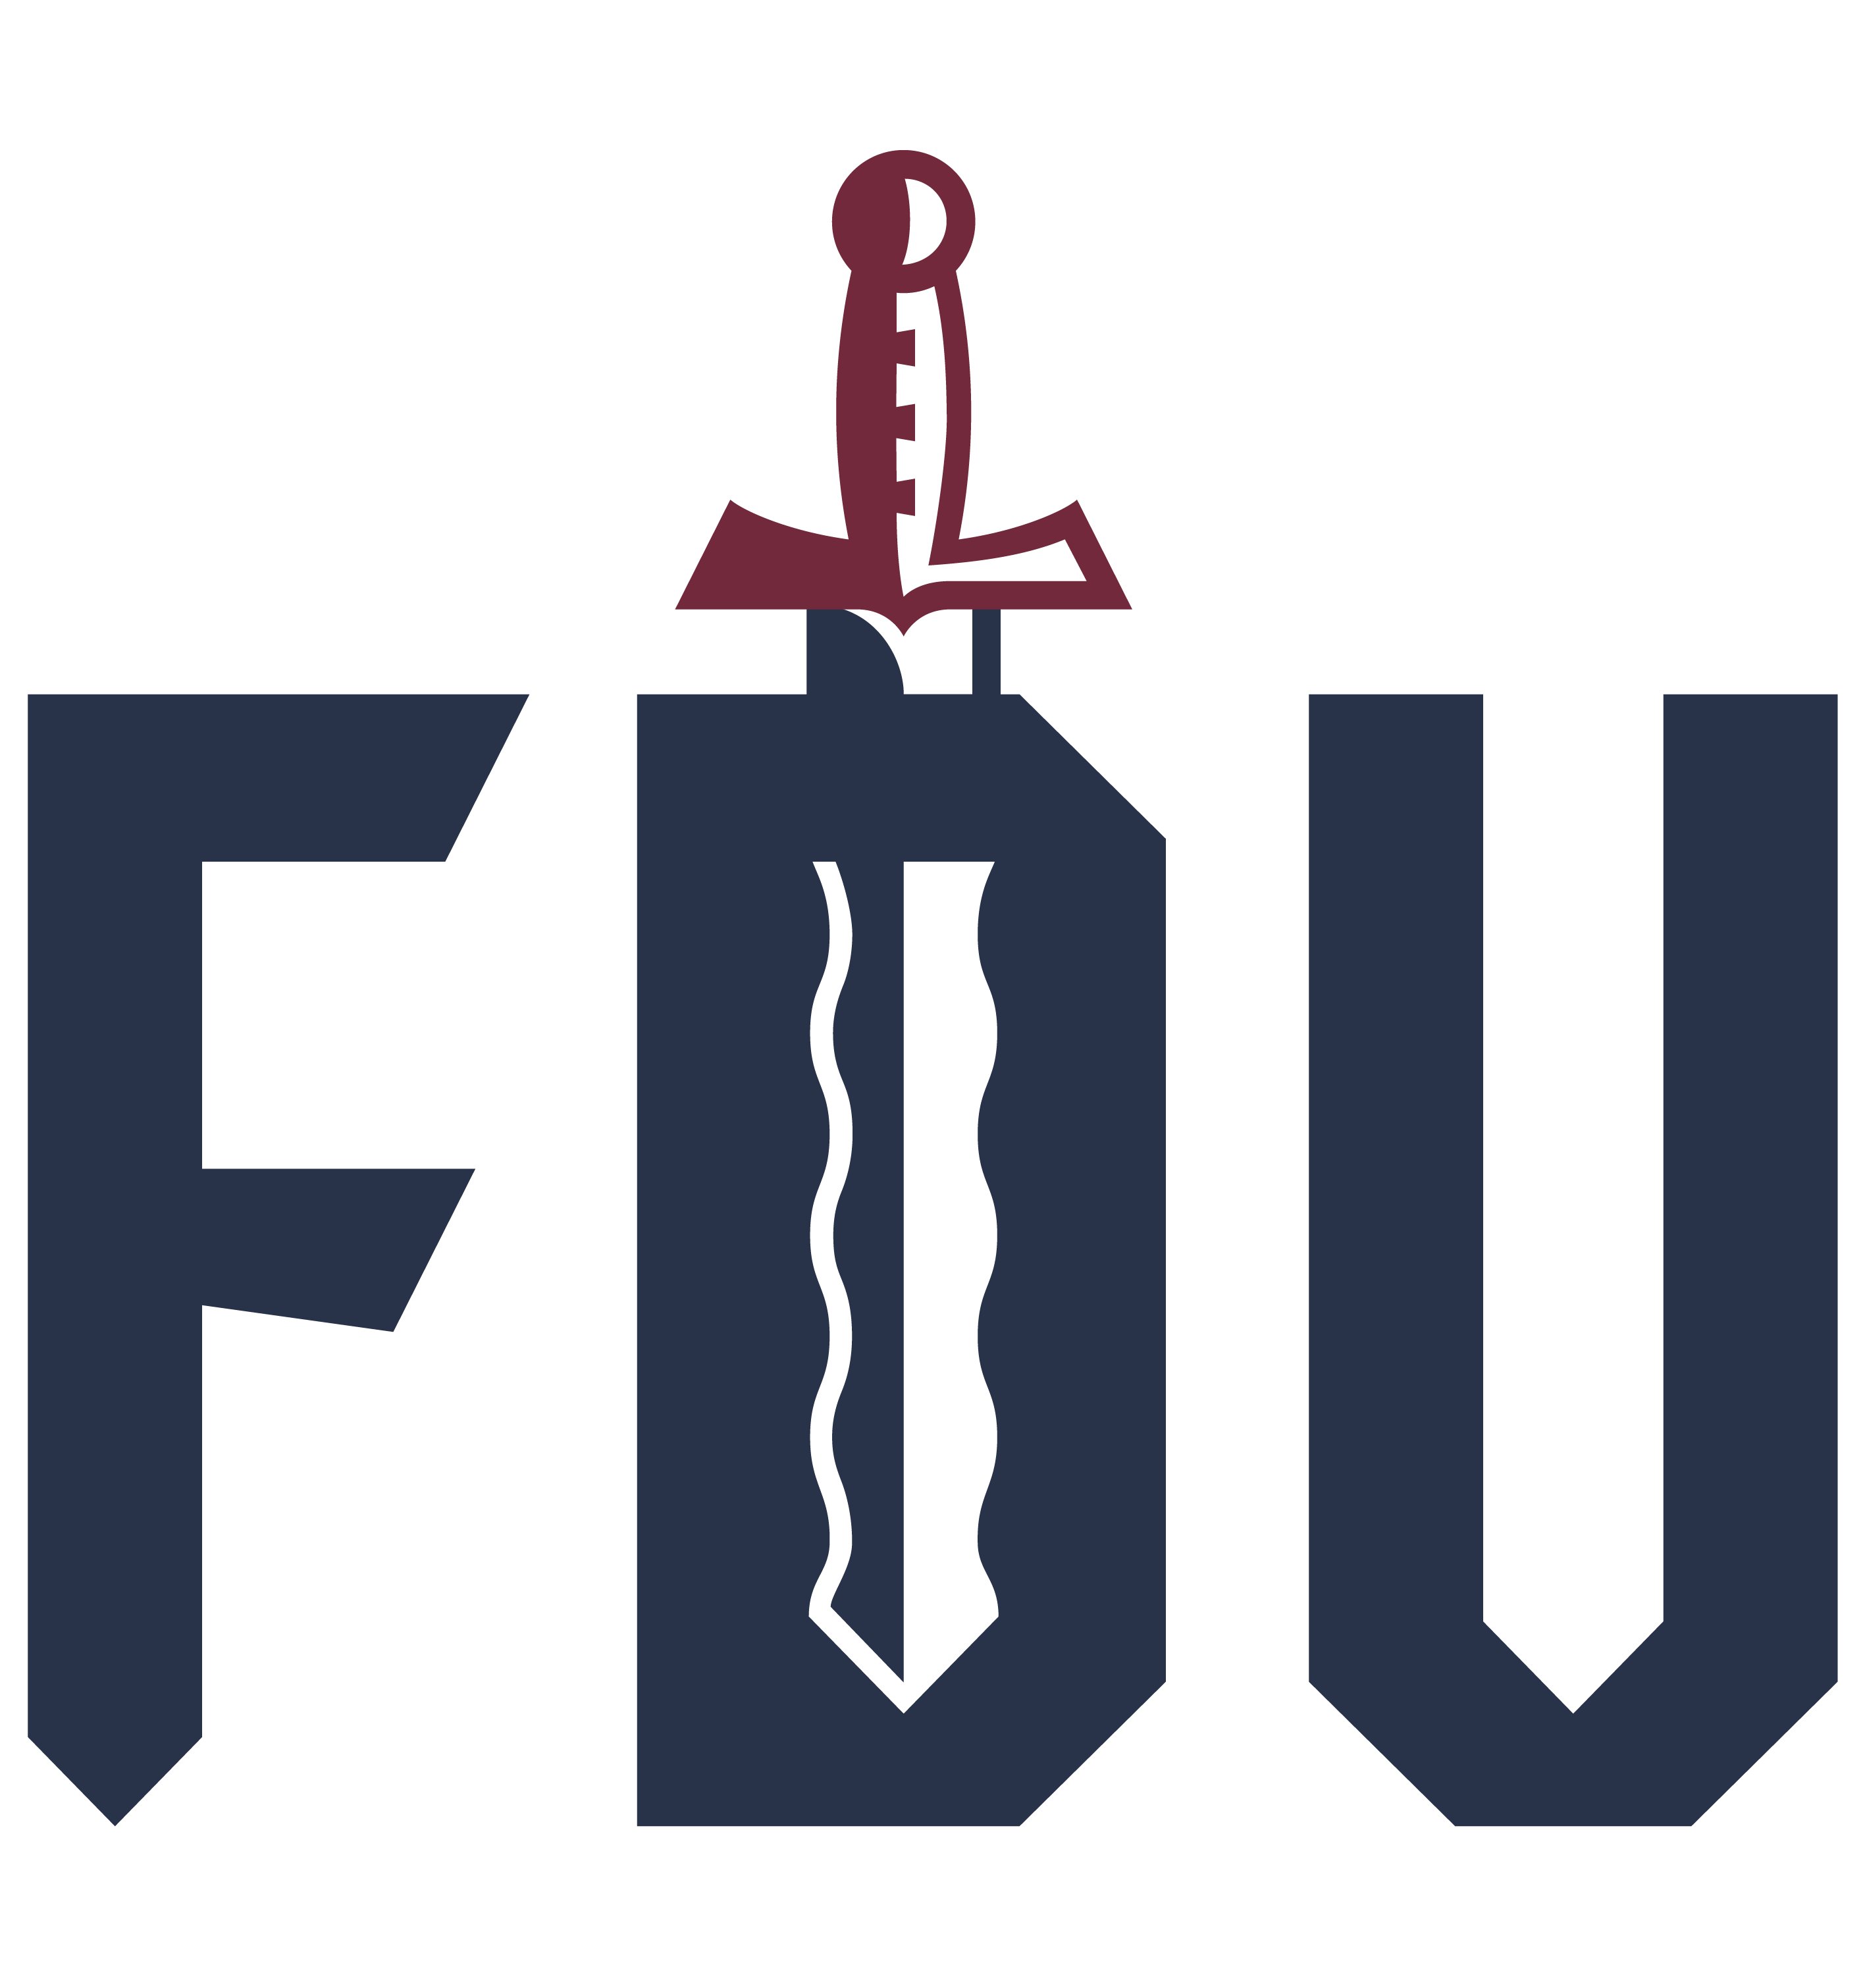 New FDU brand logo with a Knight's sword.